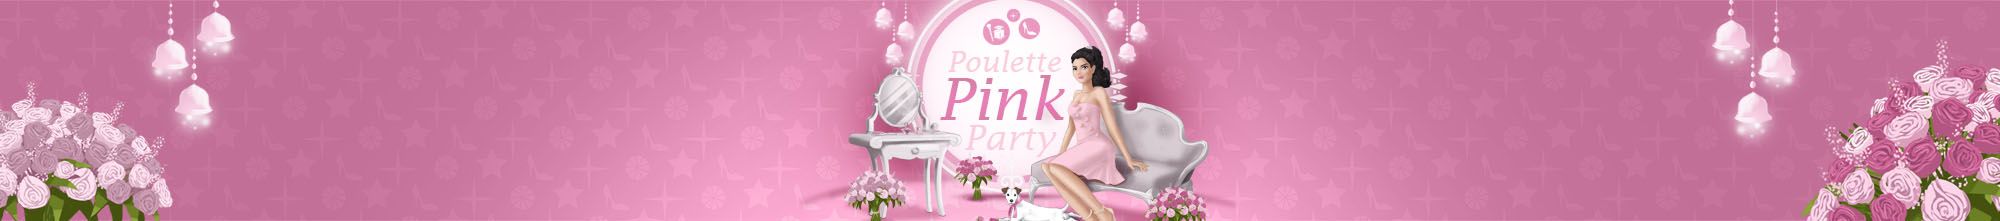 Poulette Pink Party